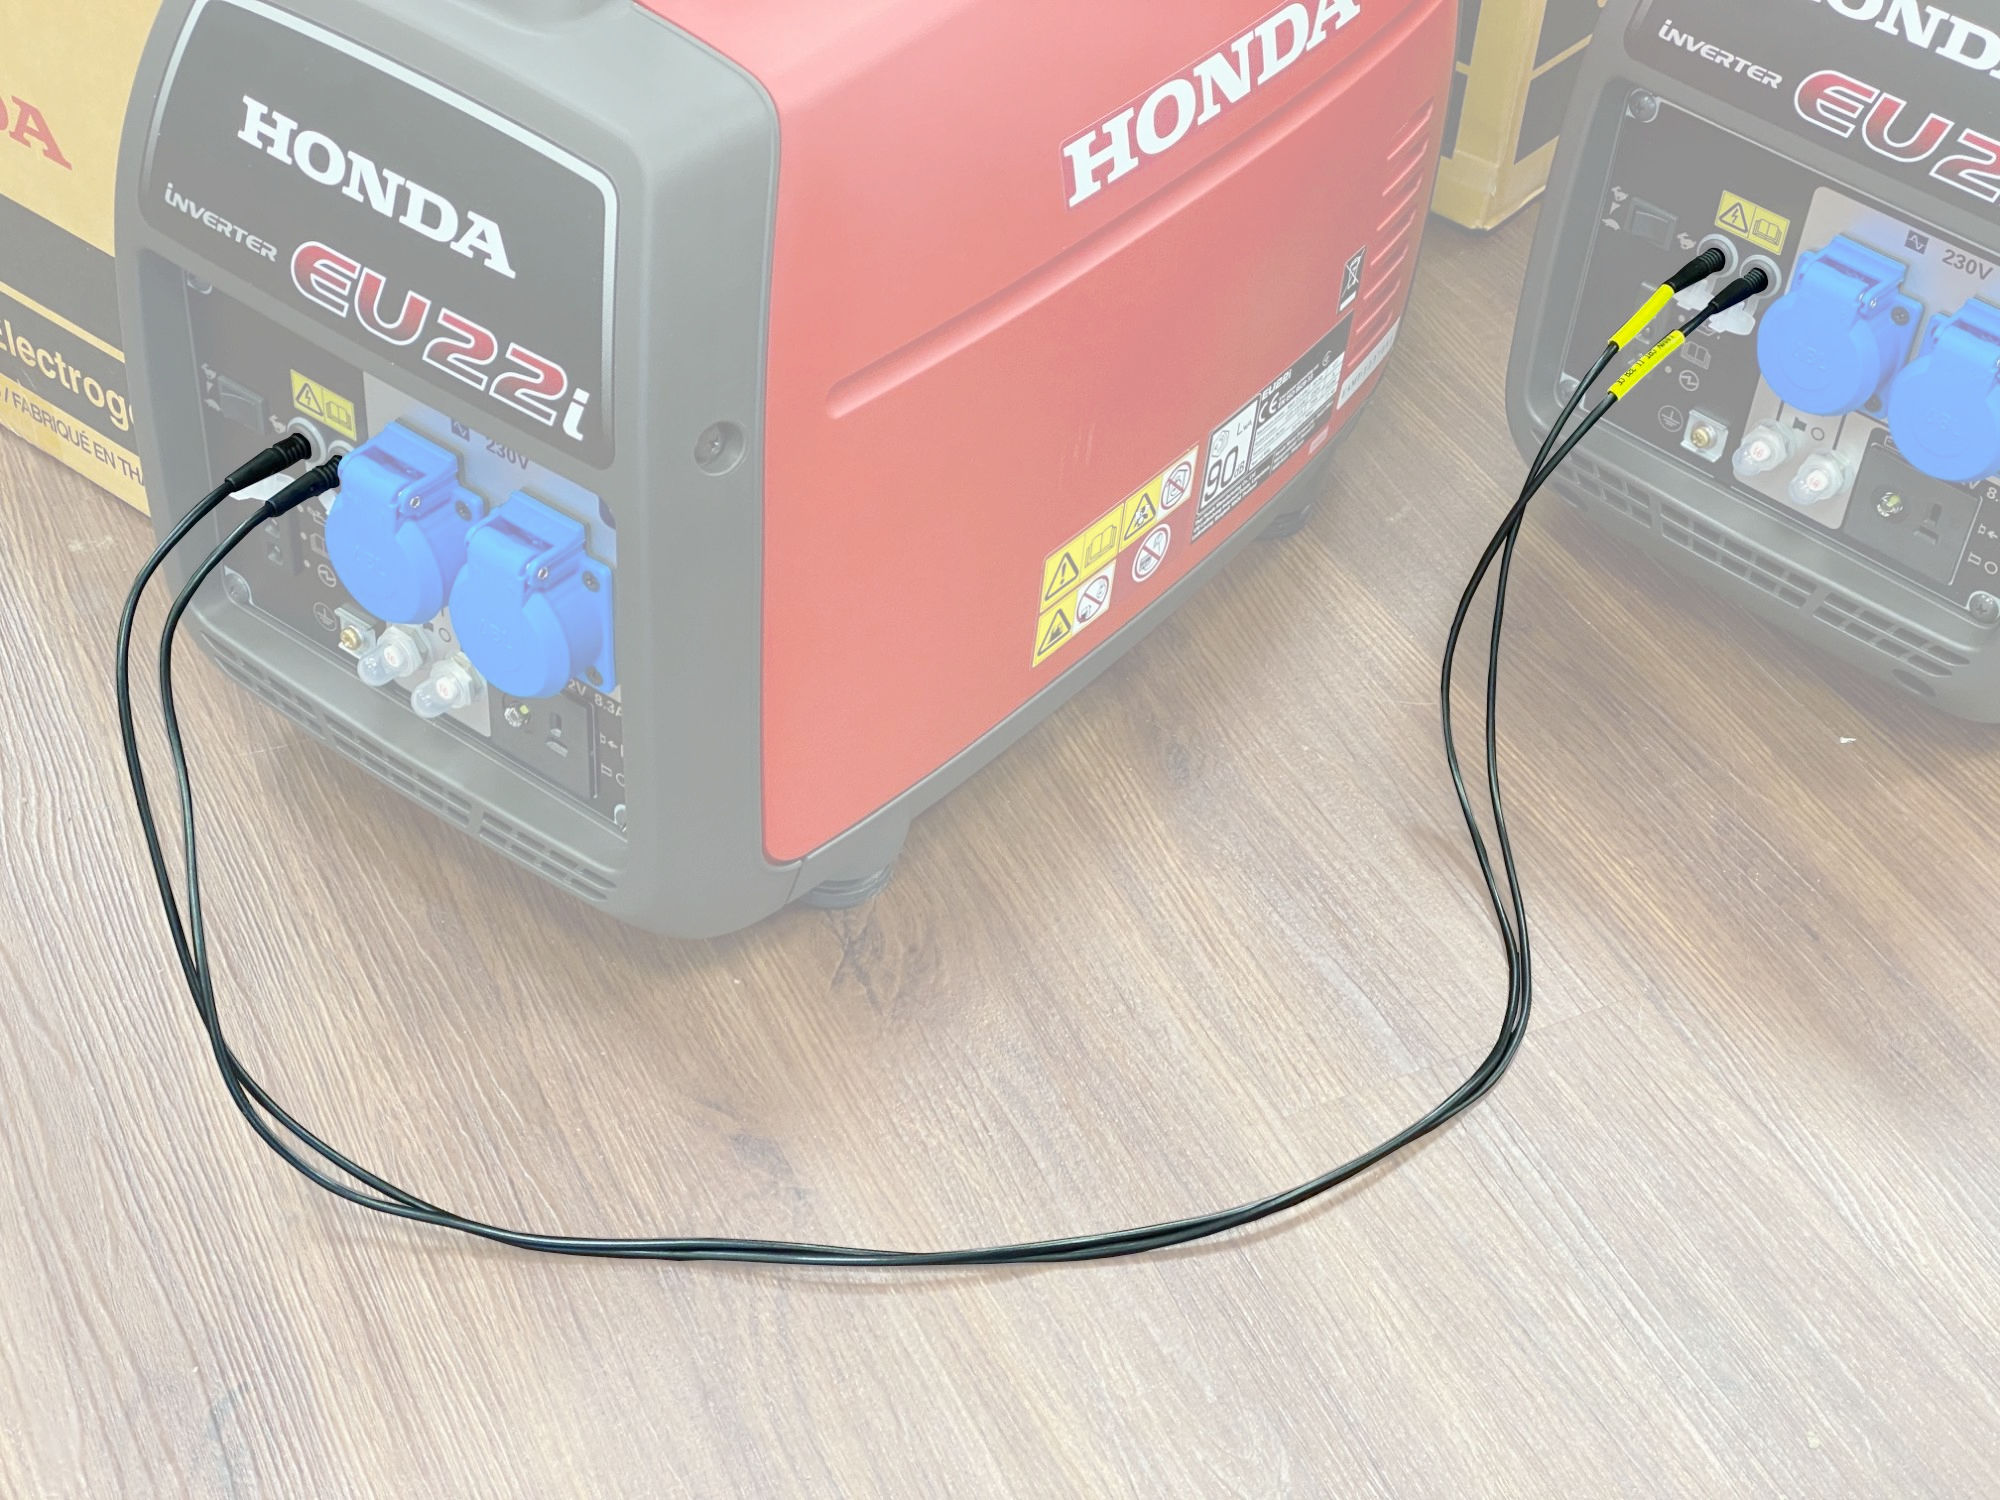 https://www.marine-sales.de/images/upload/Generatoren/Honda-Generatorzubehoer/honda-eu-22i-parallel-kabel-32-amp-02.jpg